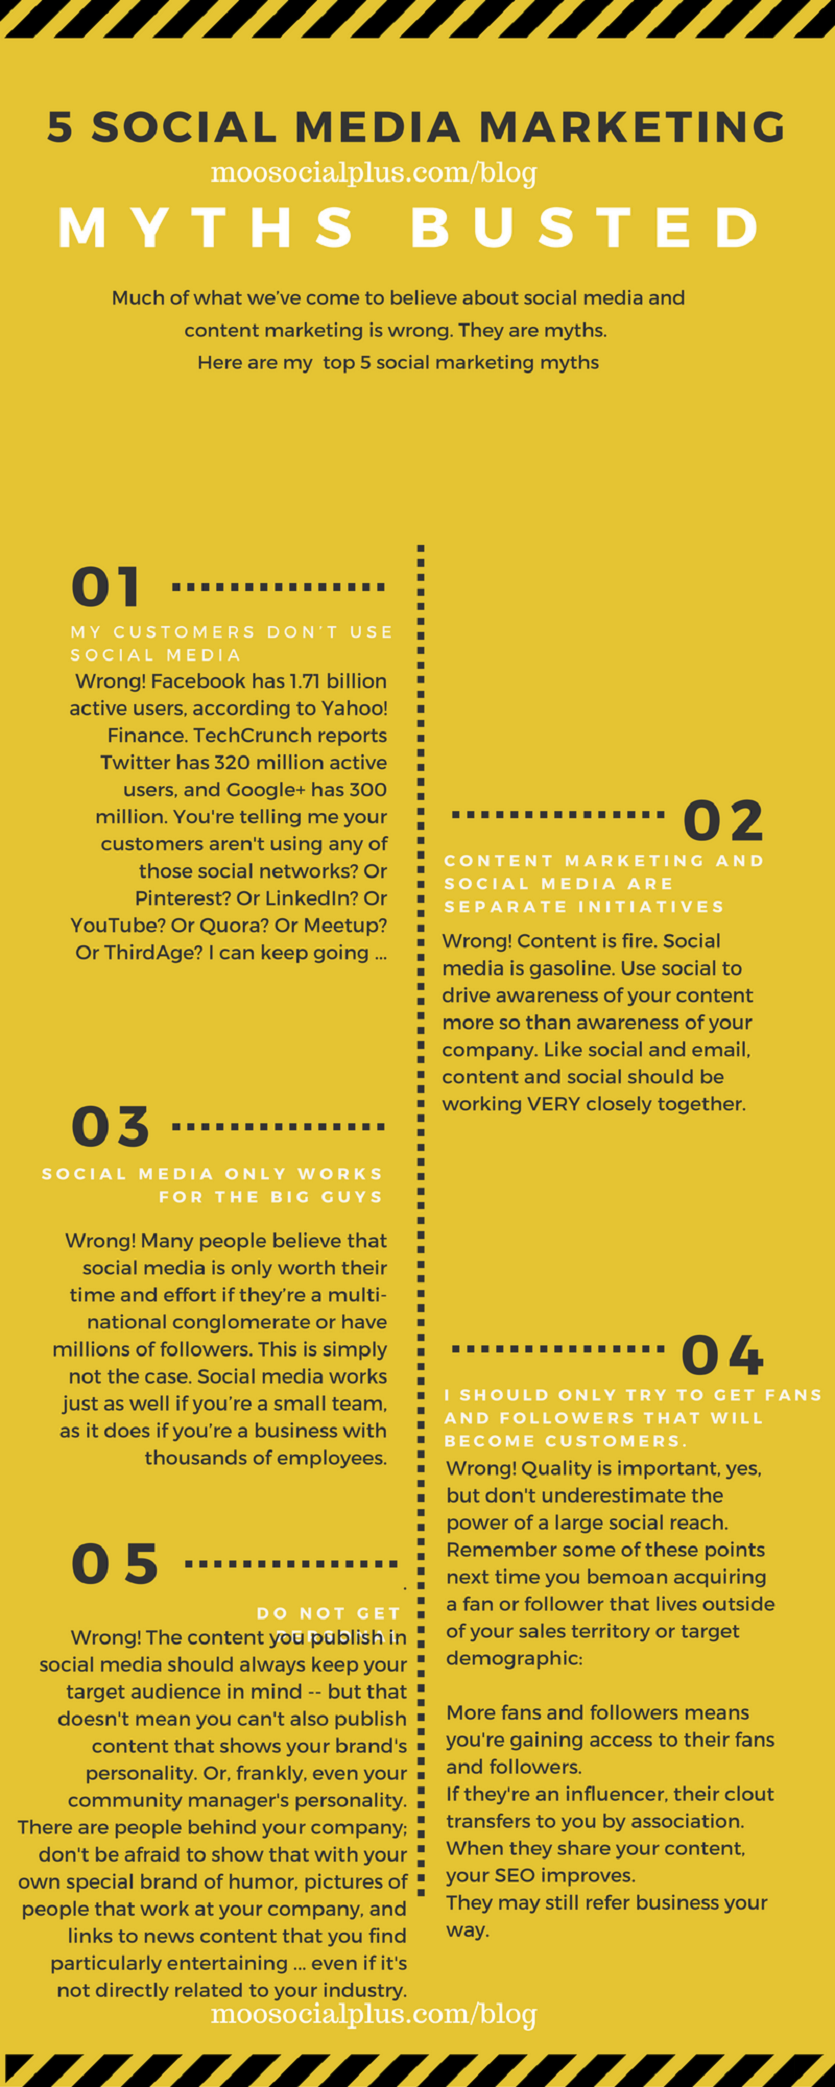 lwolf 5 social media marketing myths Infographic